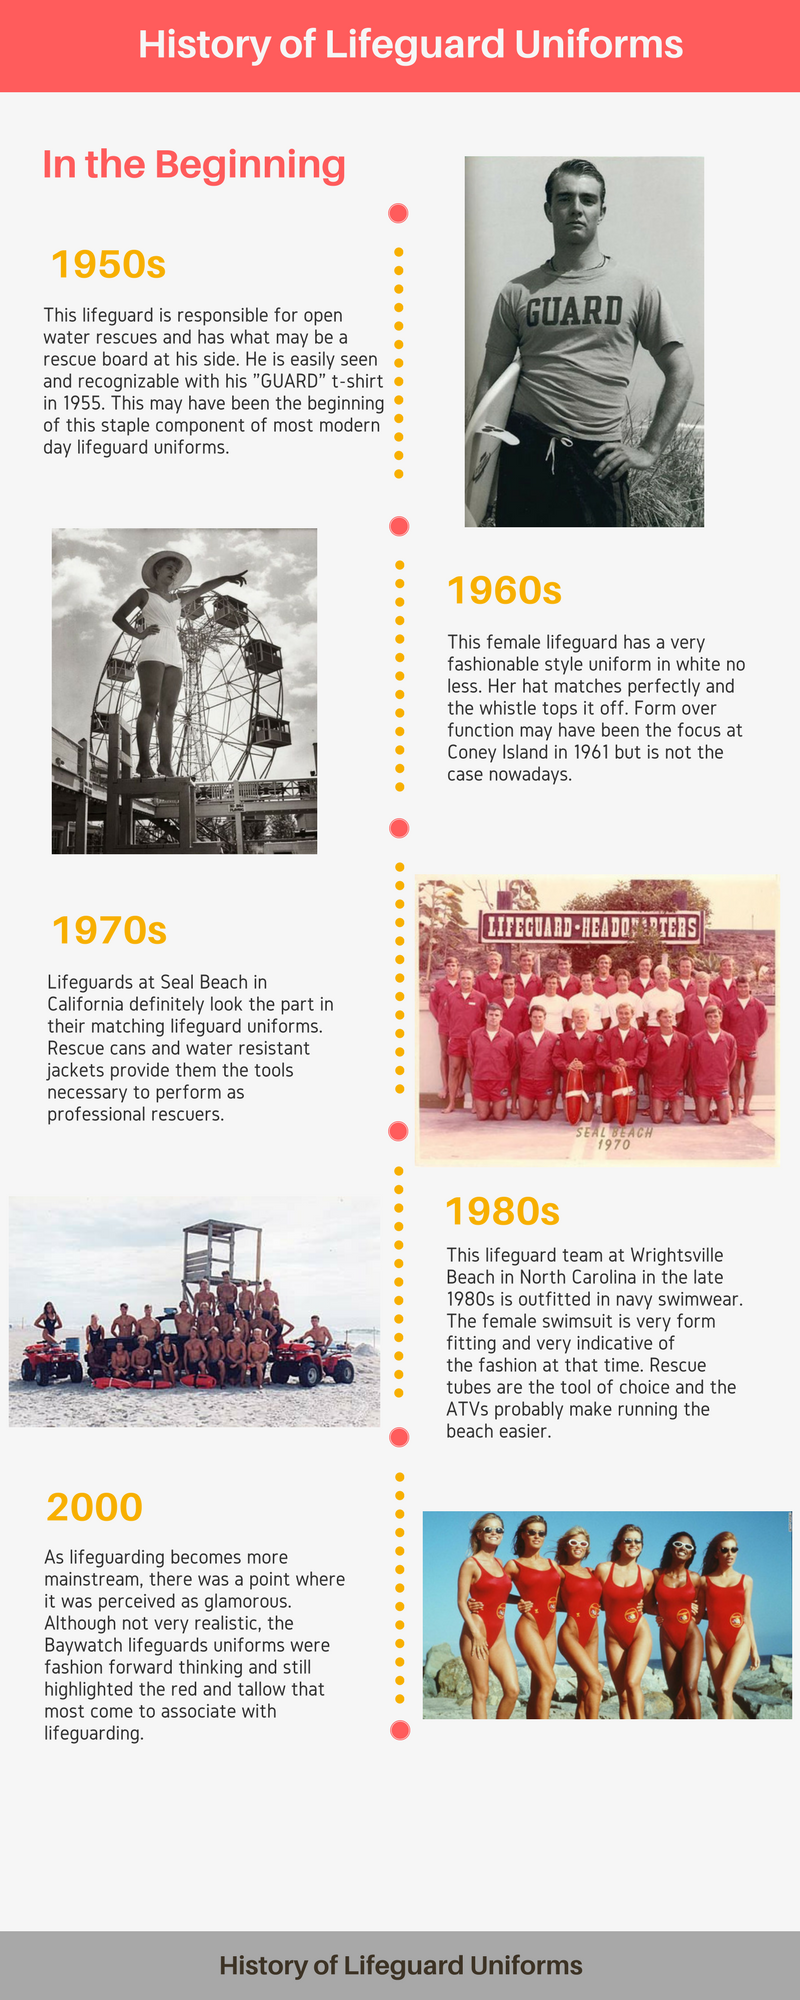 History of Lifeguard Uniforms